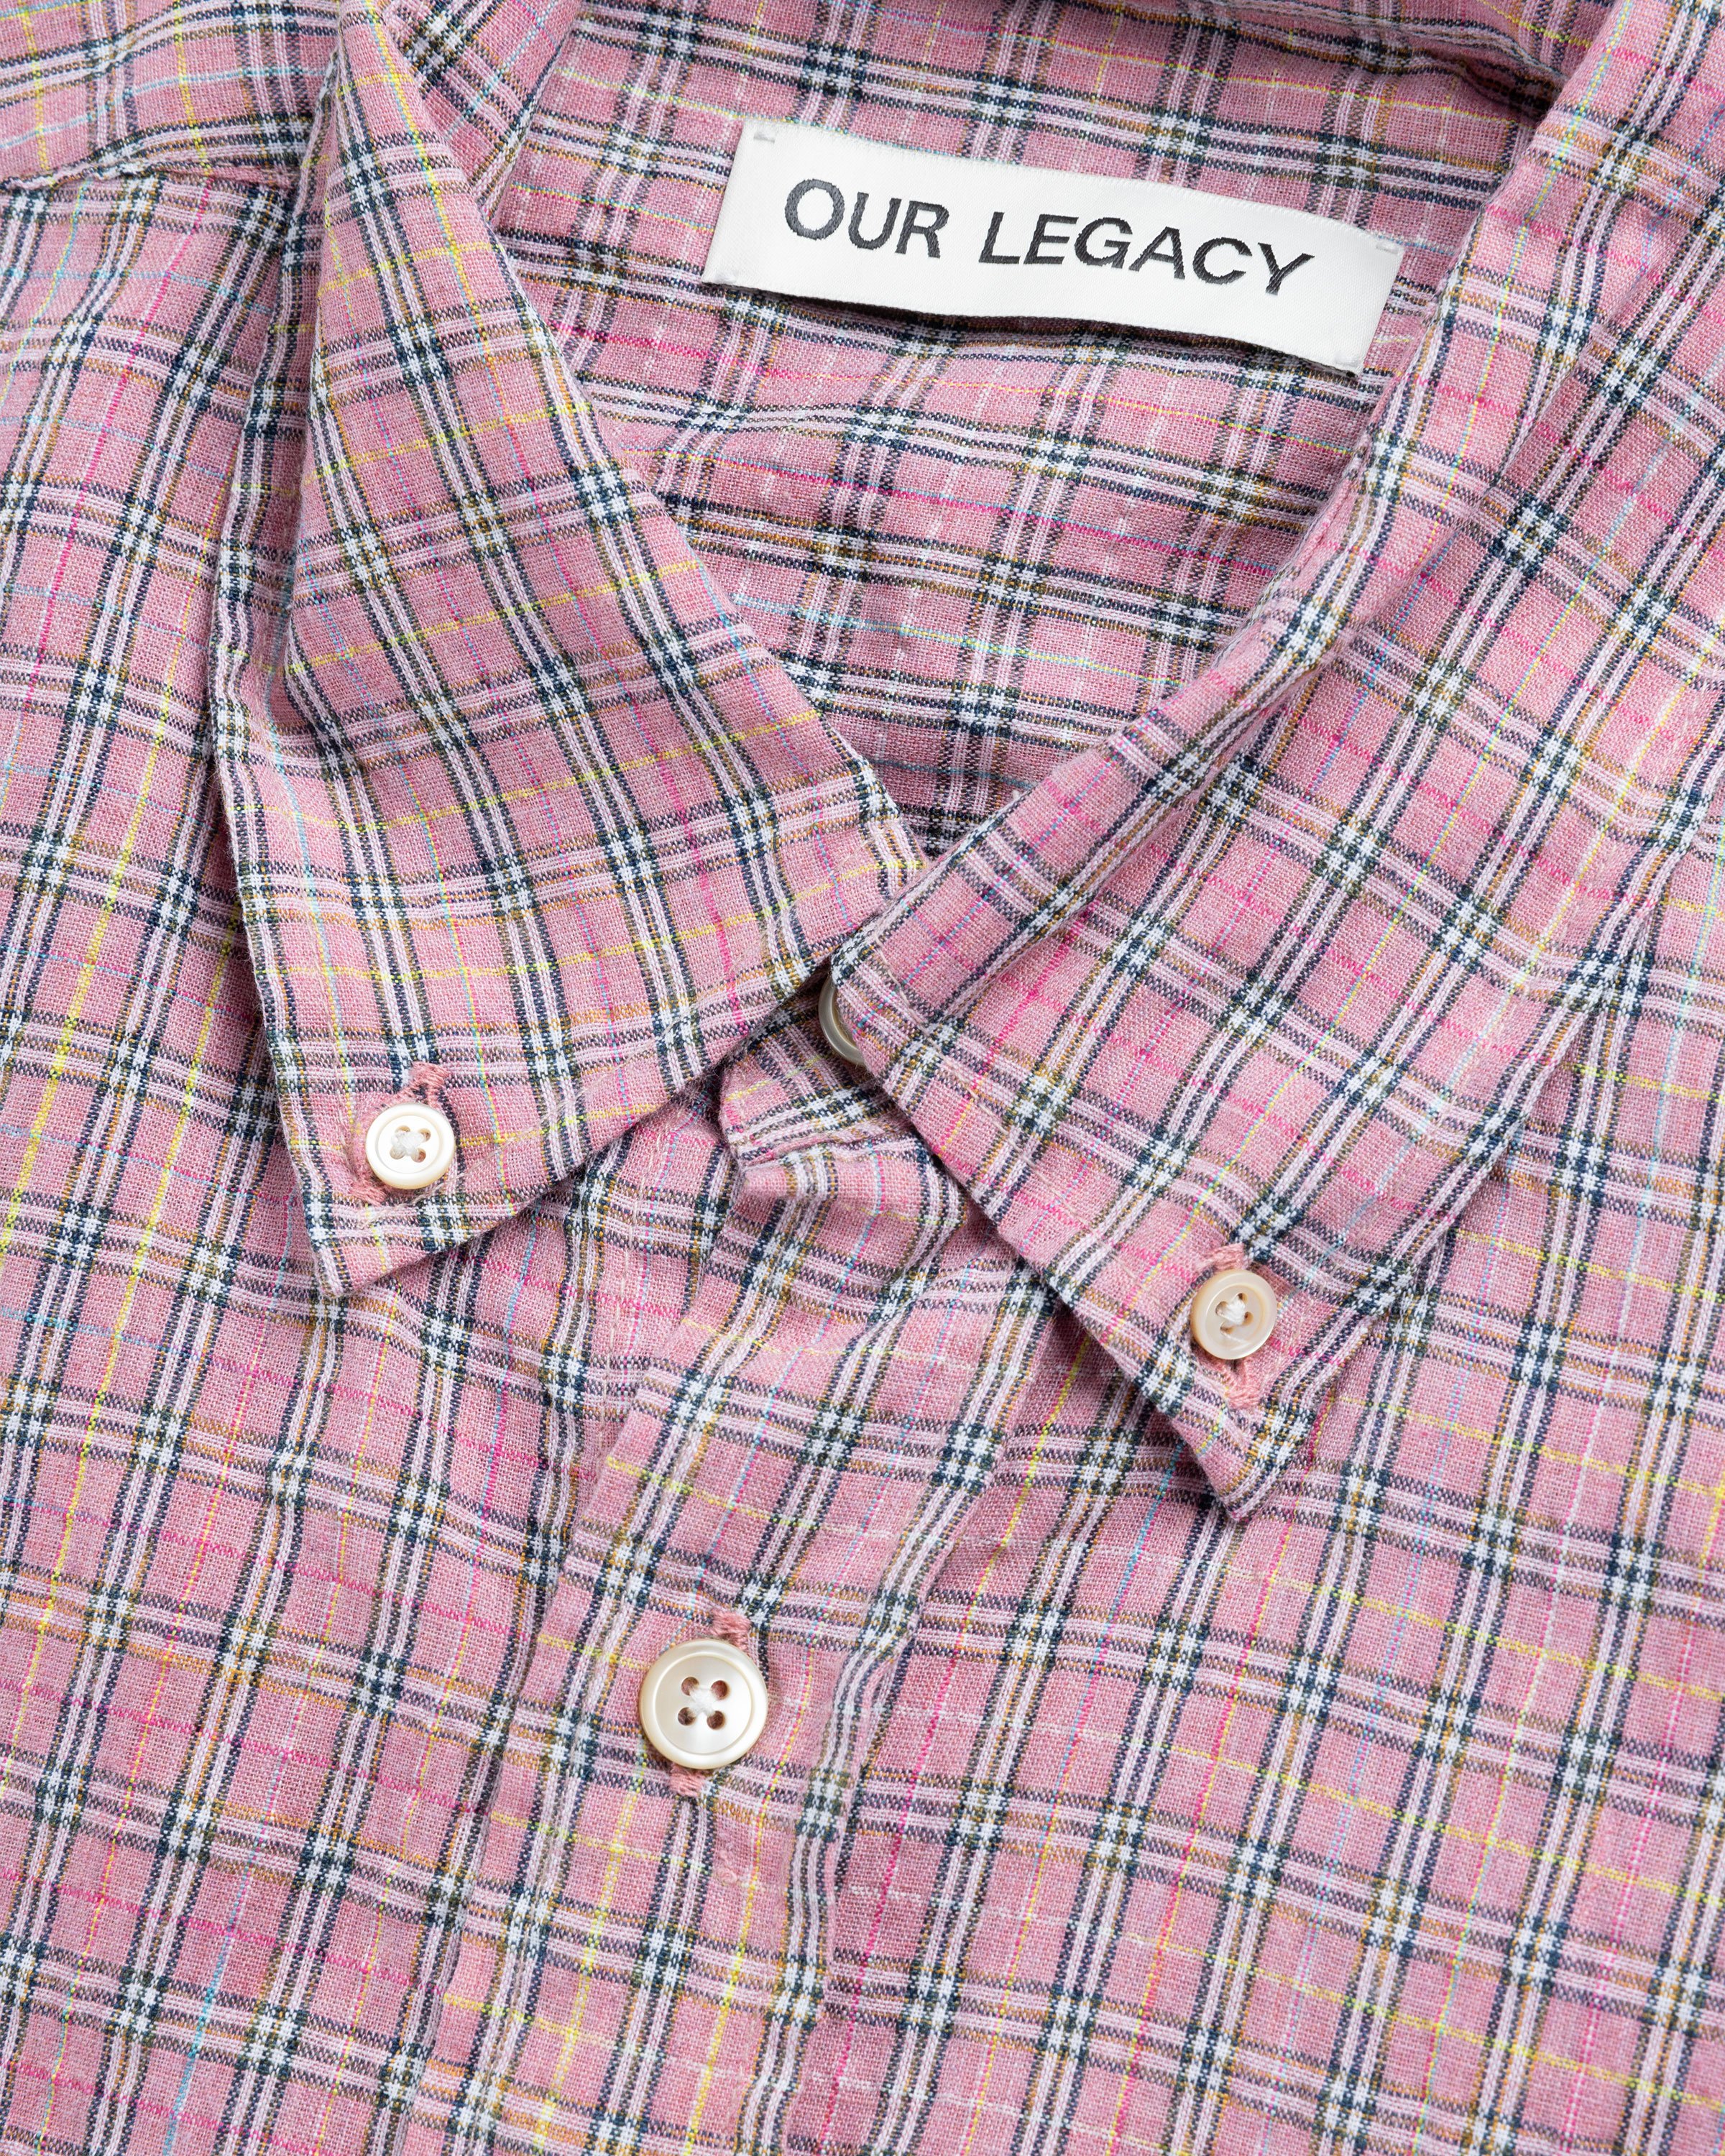 Our Legacy - Borrowed BD Shirt Pink Kimble Check - Clothing - Pink - Image 6